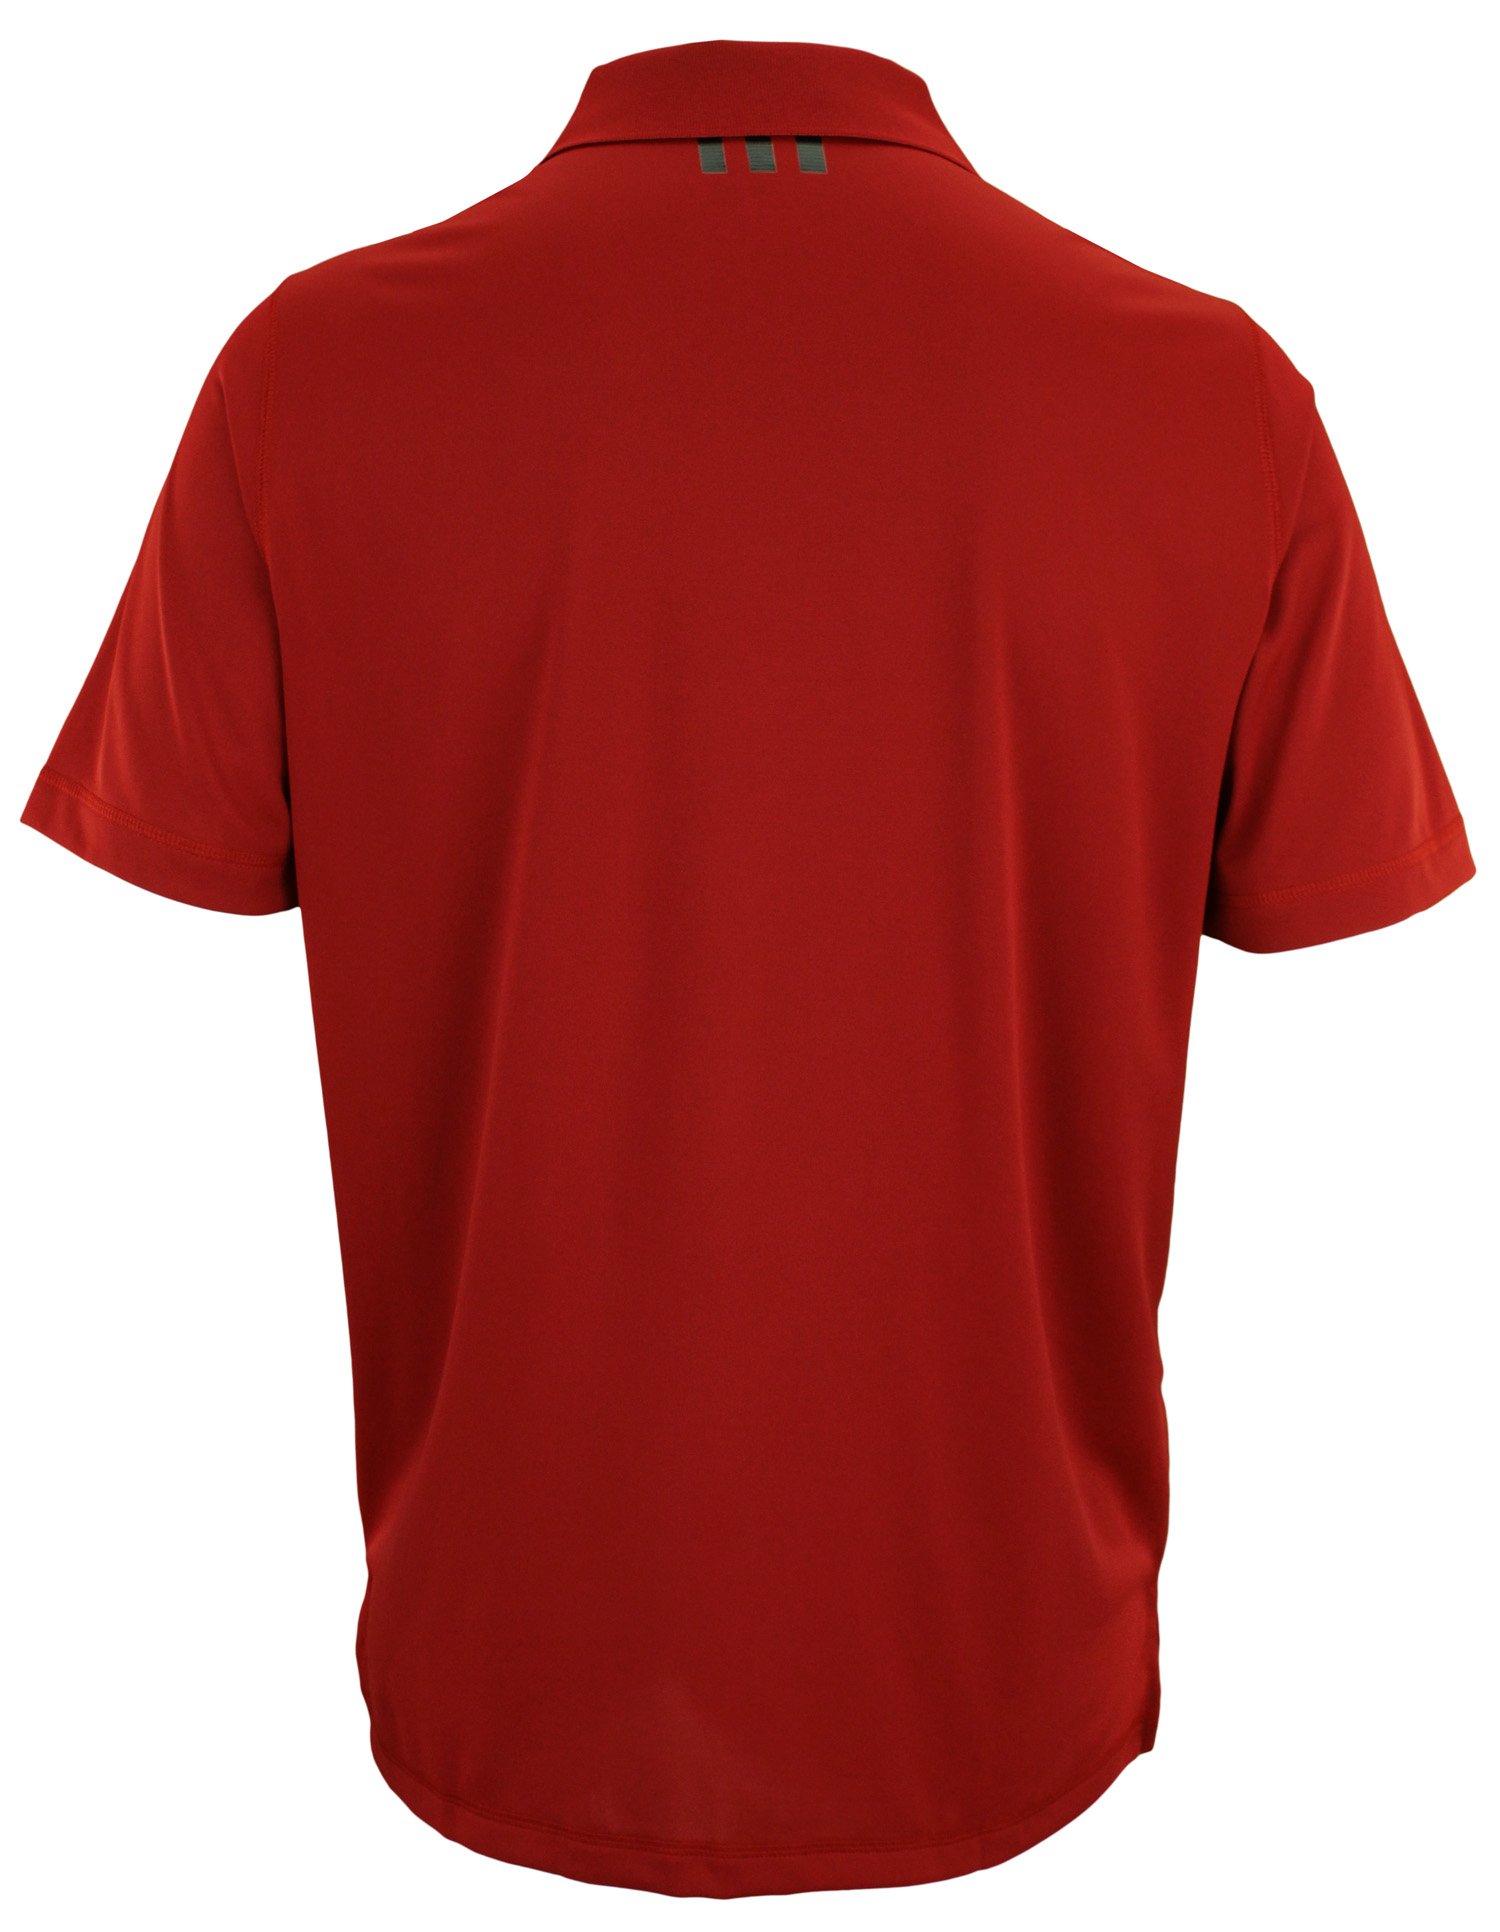 Adidas Golf Men's Puremotion Short-Sleeve Polo Shirt, Color Options - image 1 of 1